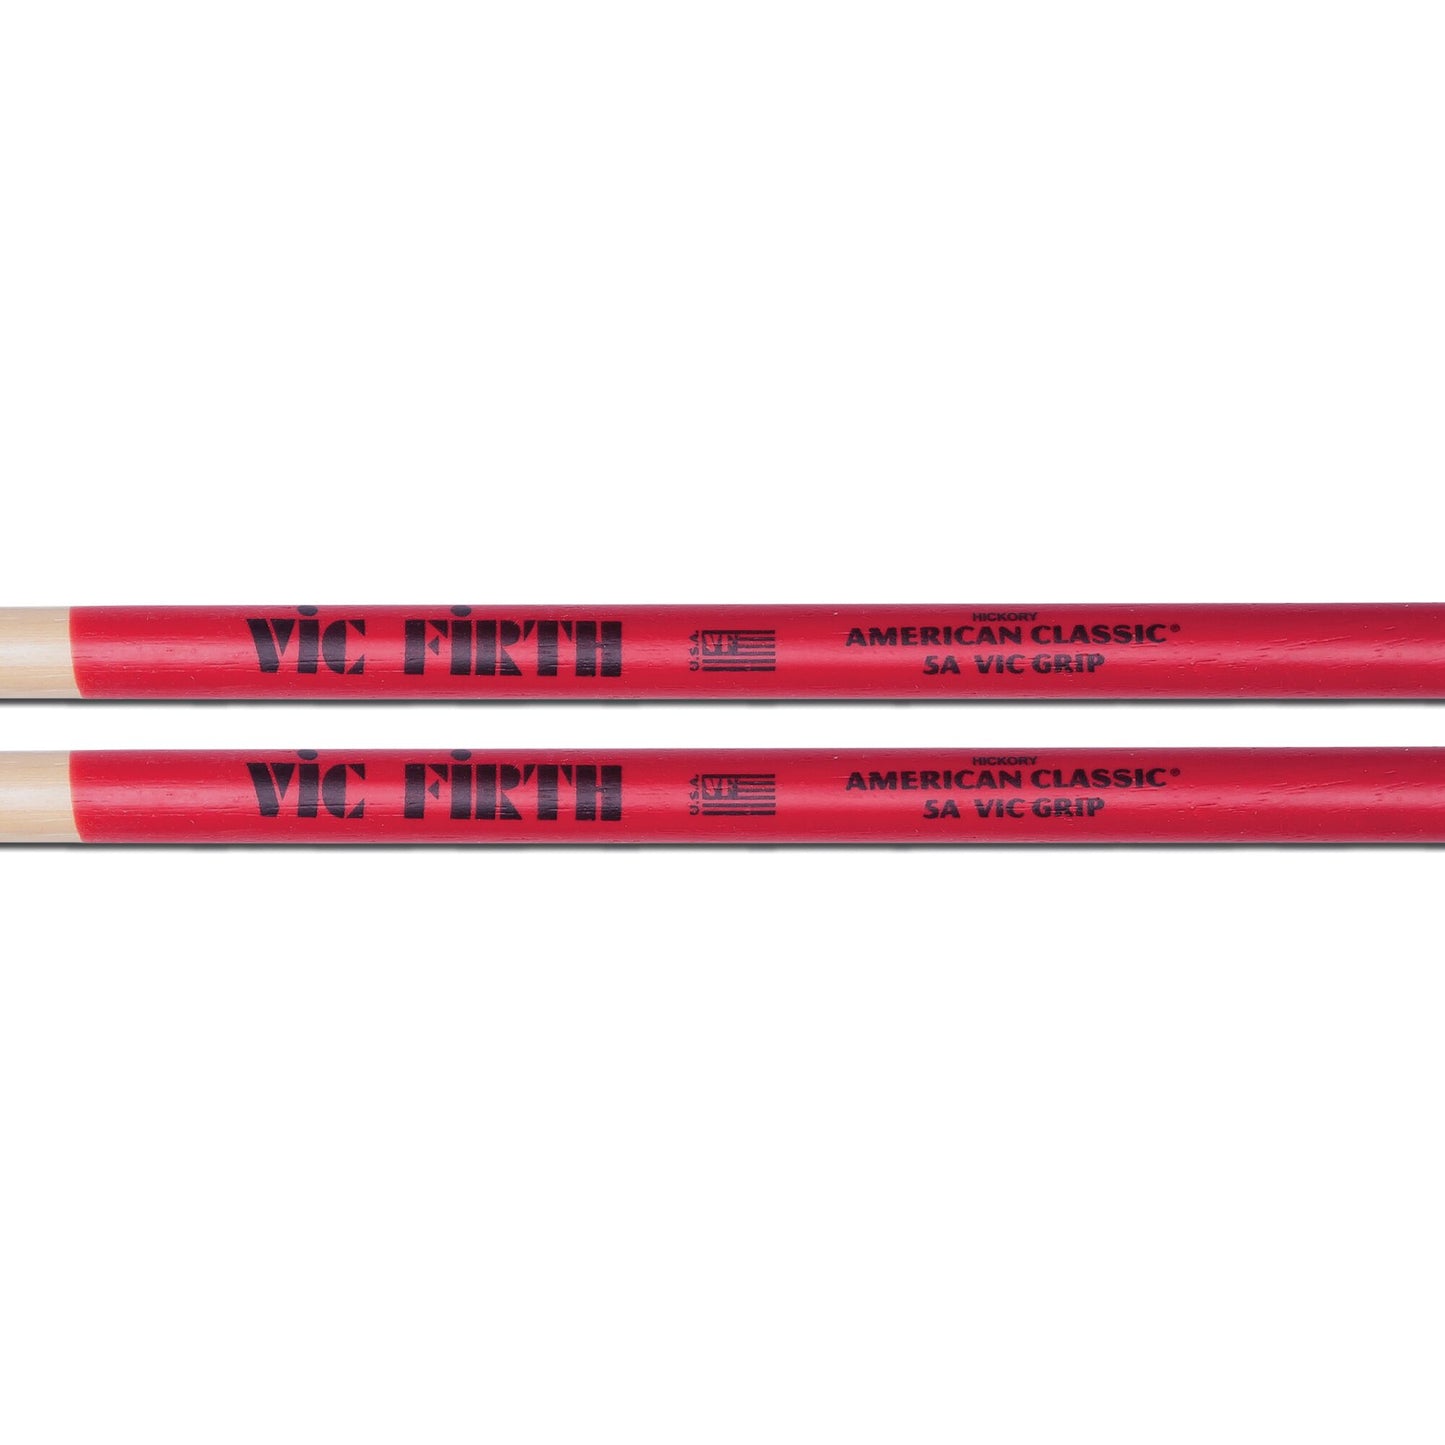 American Classic® 5A Vic Grip Drumsticks